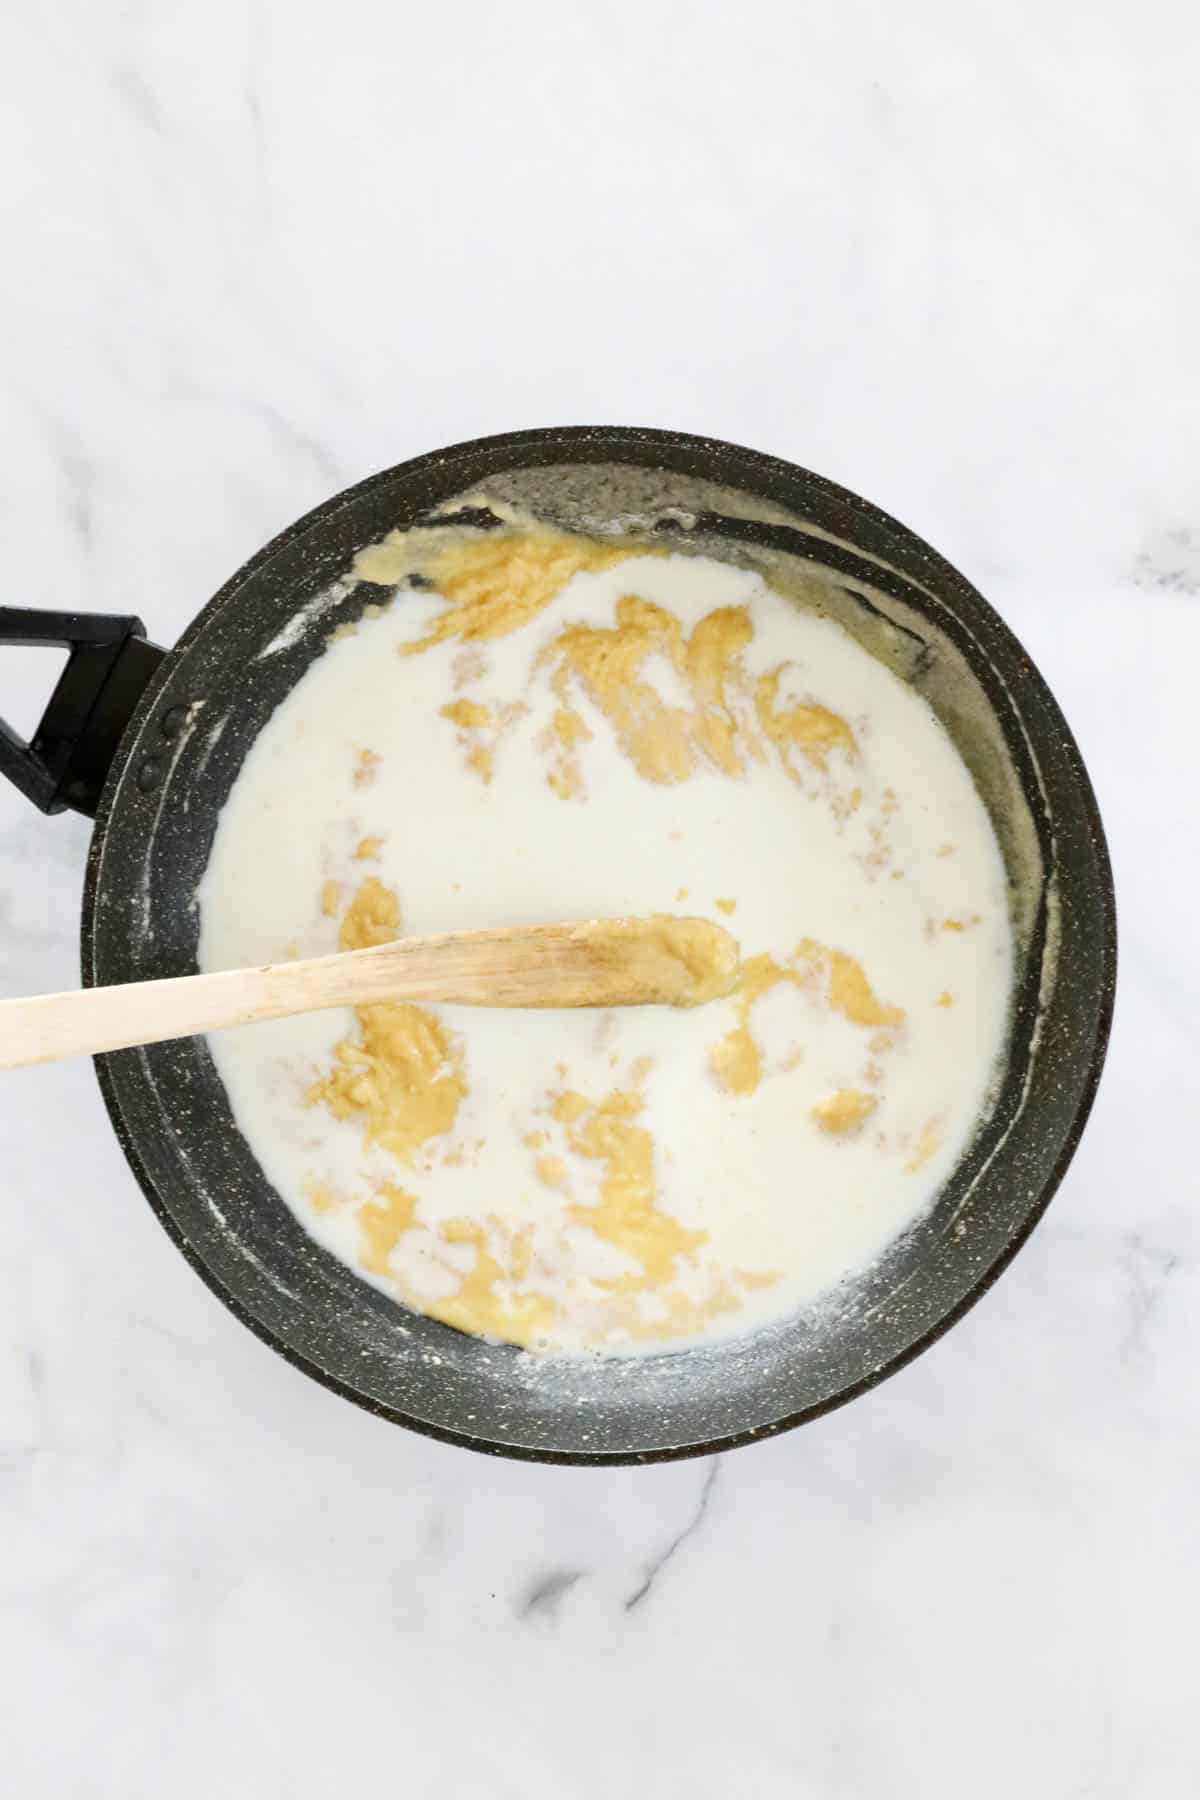 Slowly adding milk to the pan to make creamy cheese sauce.